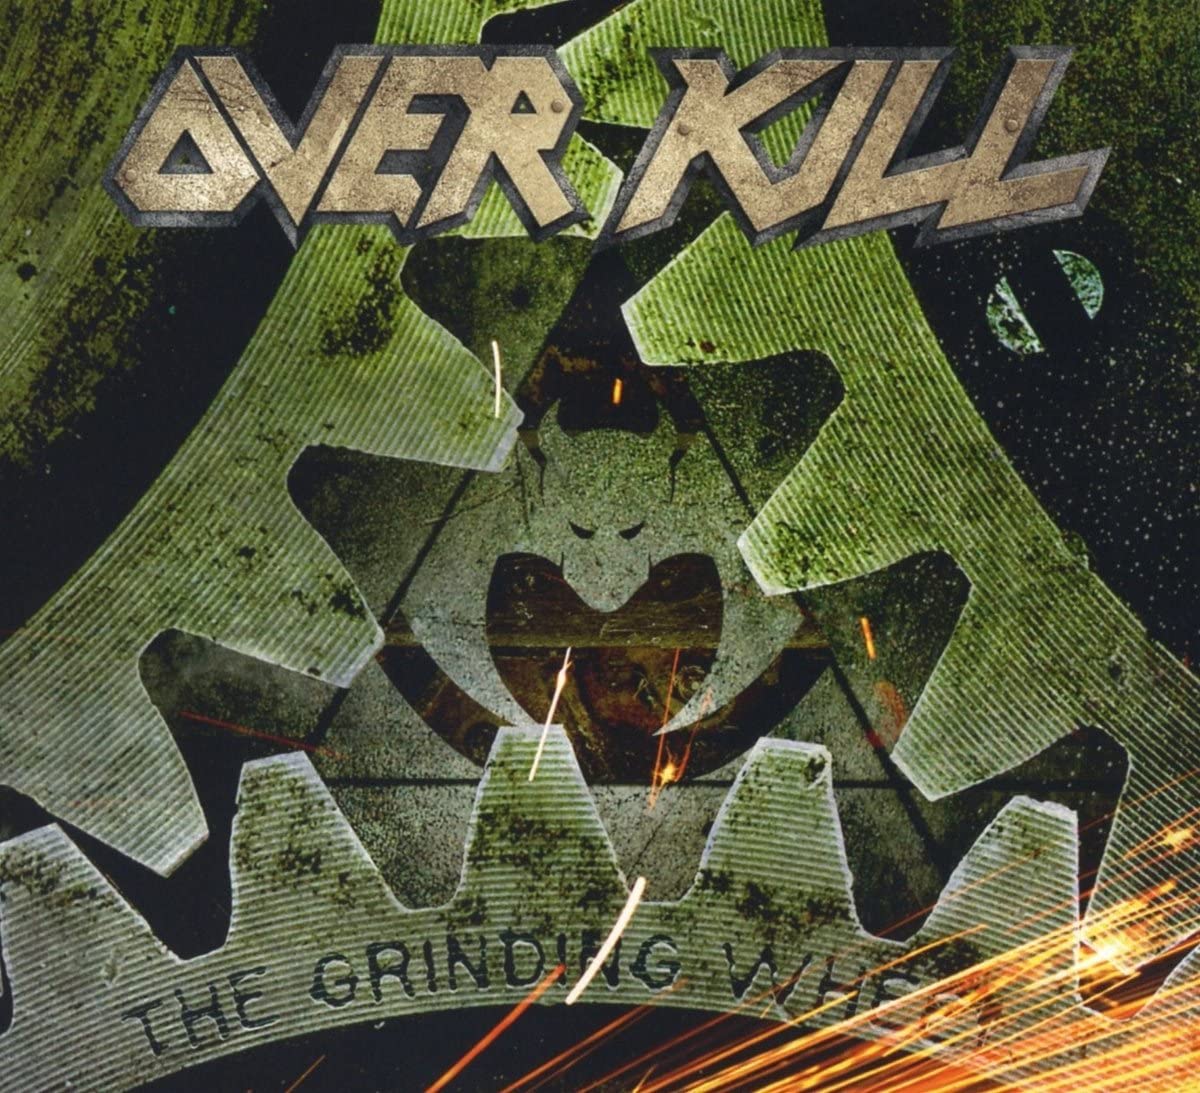 The Grinding Wheel | Overkill